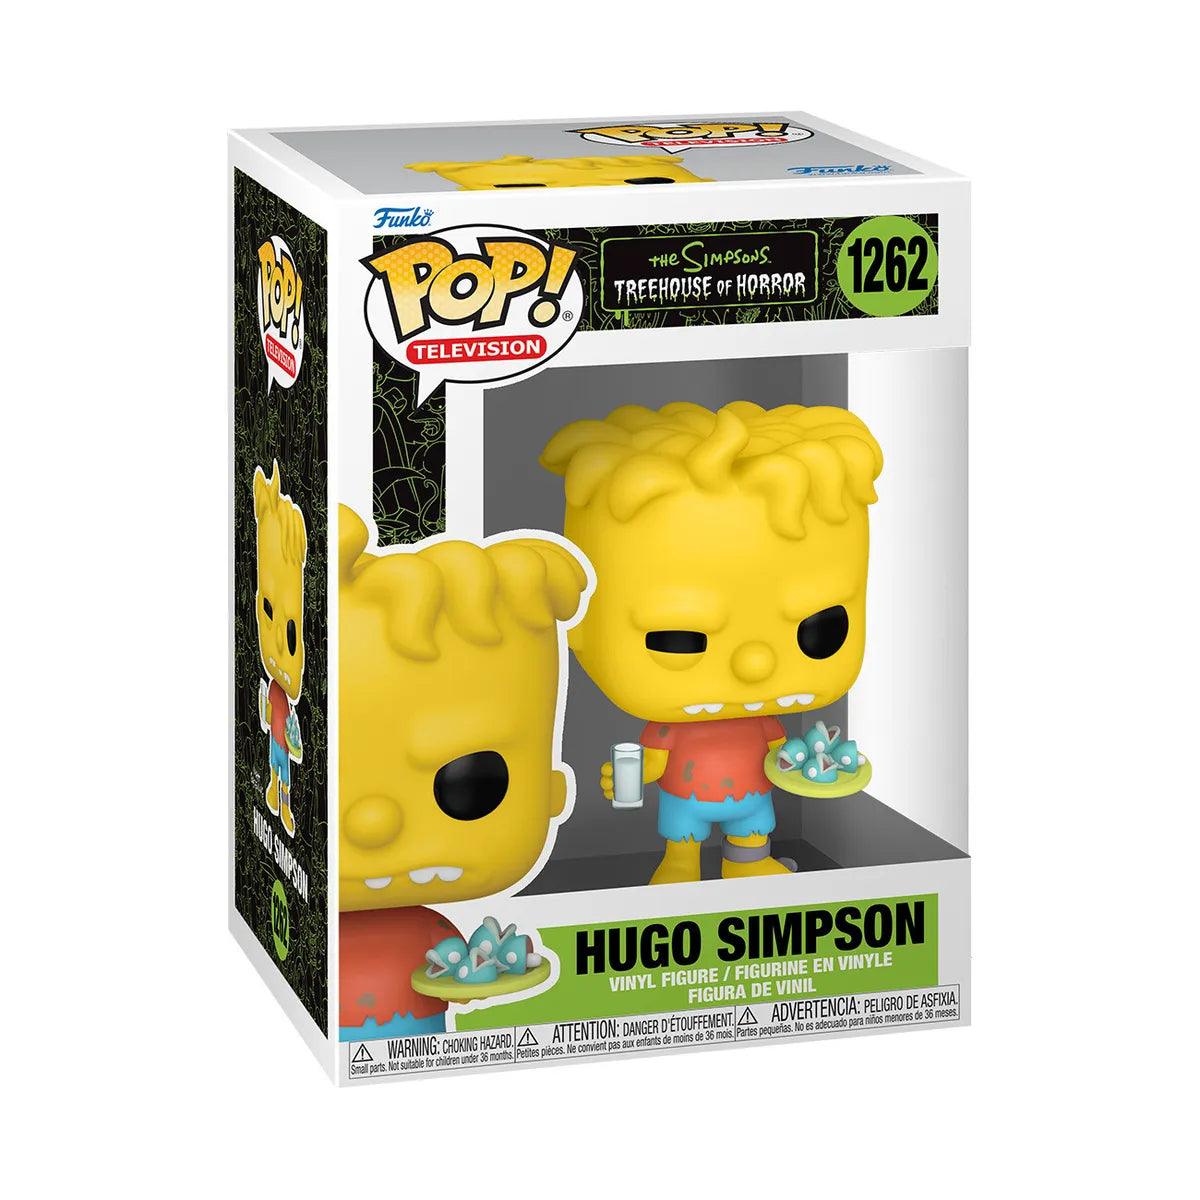 Pop! Television - The Simpsons - Hugo Simpson (Bart) - #1262 - Hobby Champion Inc